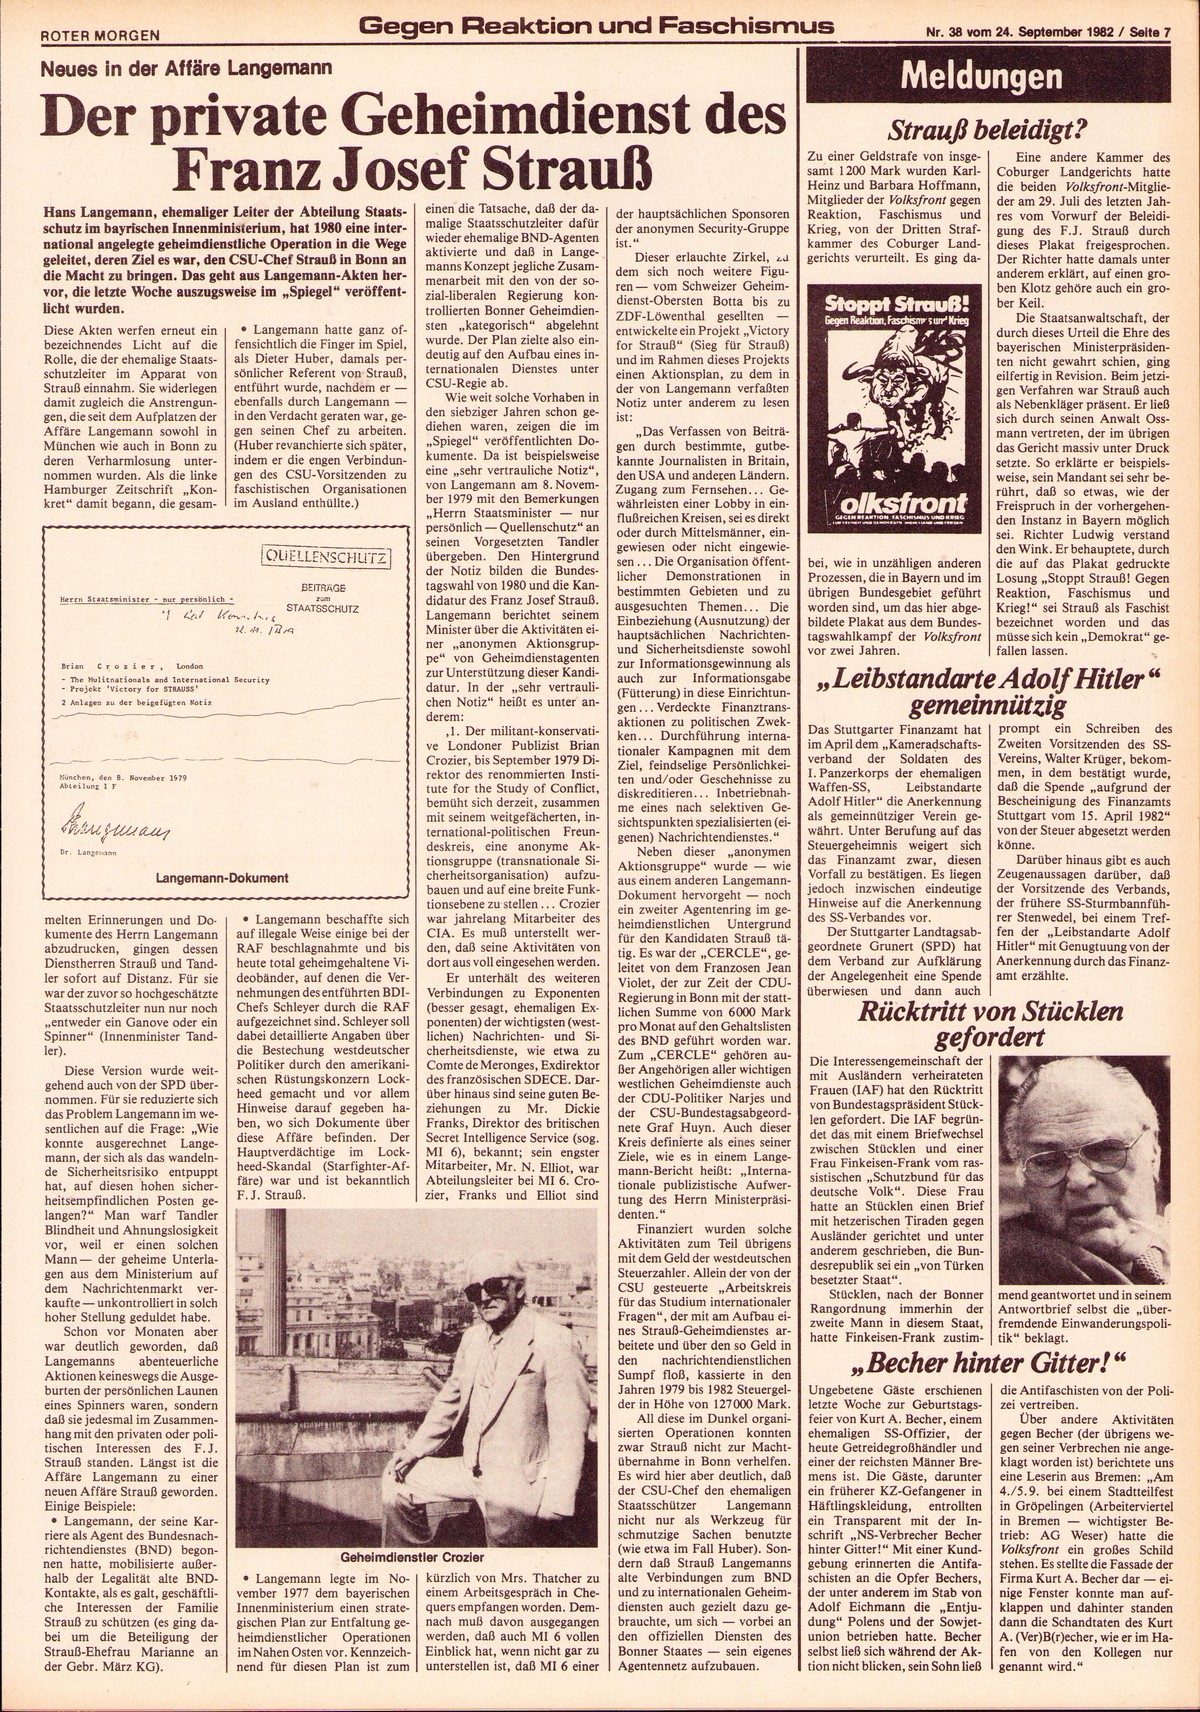 Roter Morgen, 16. Jg., 24. September 1982, Nr. 38, Seite 7